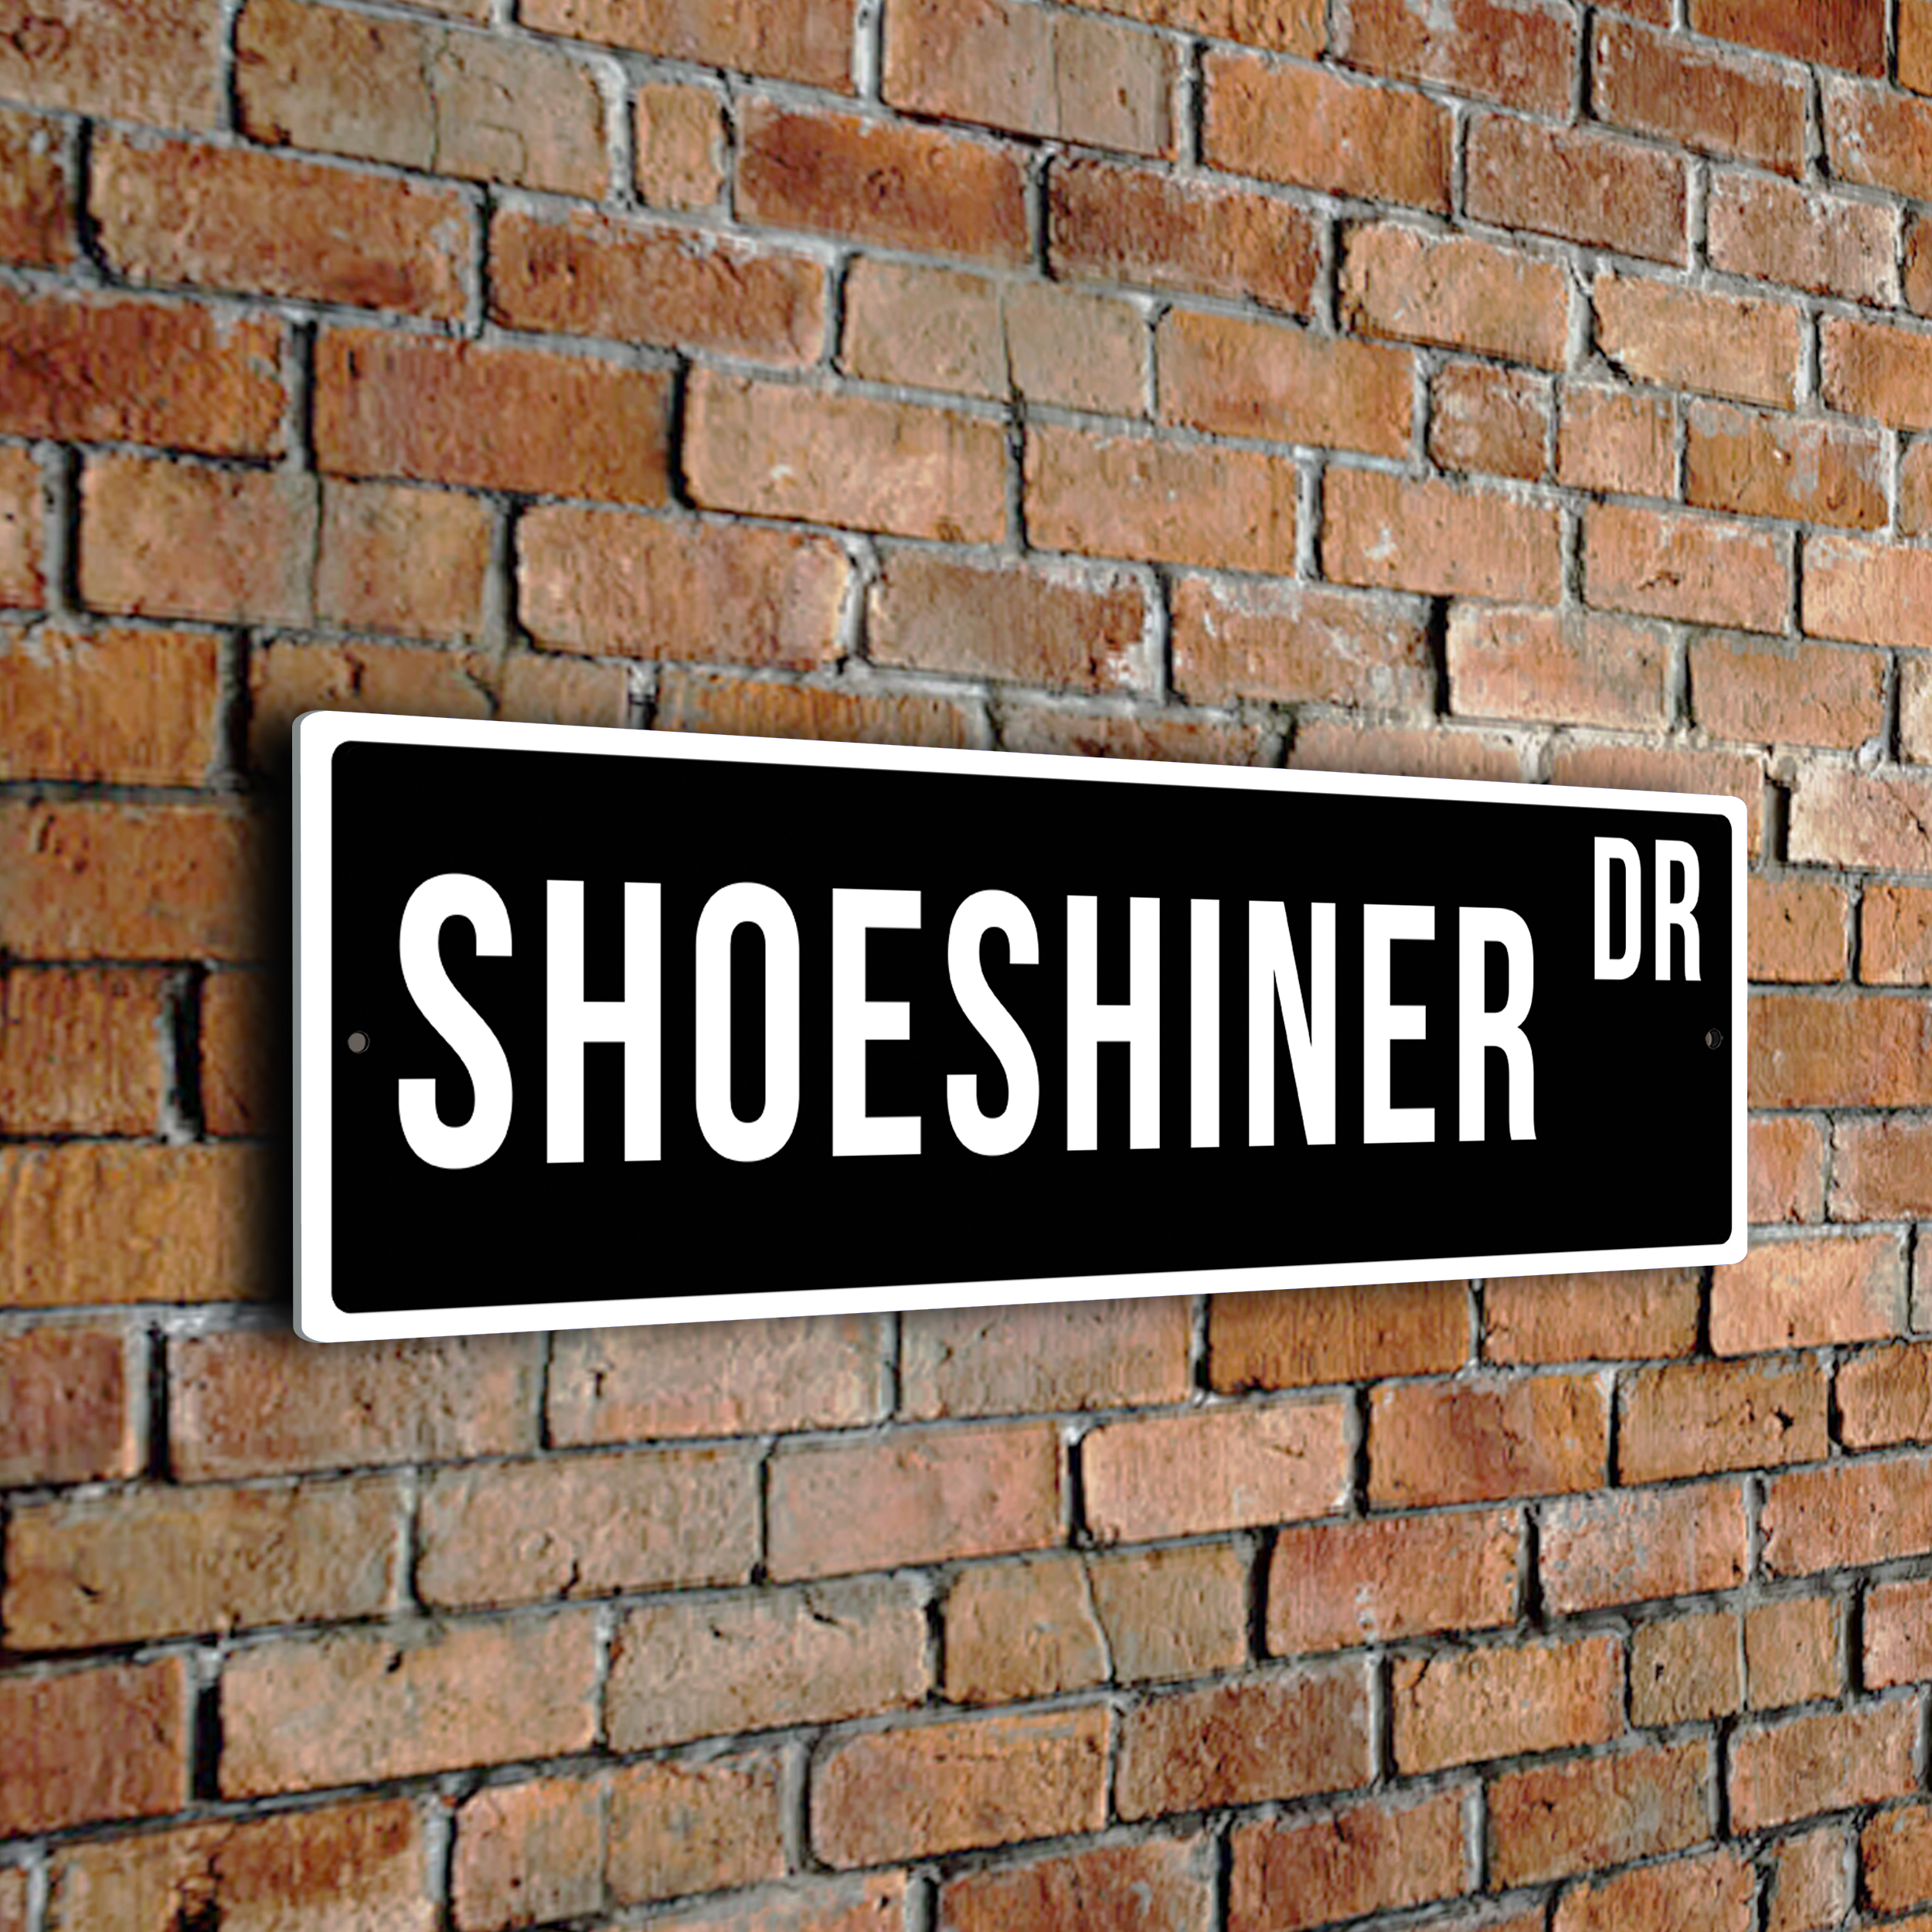 Shoeshiner street sign